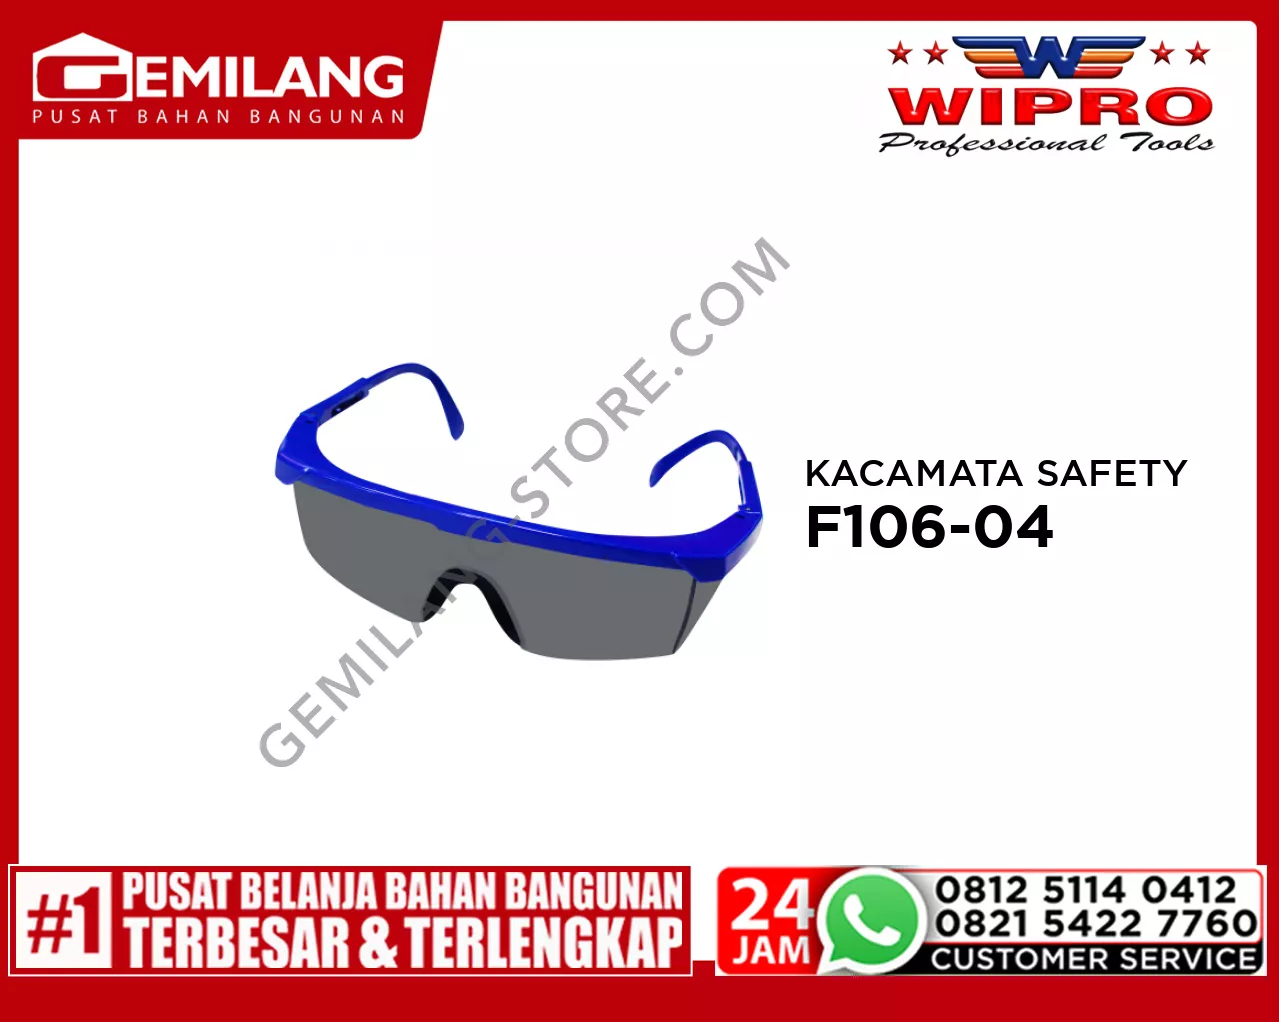 WIPRO KACAMATA SAFETY F106-04 SMOKE FRAME BLUE